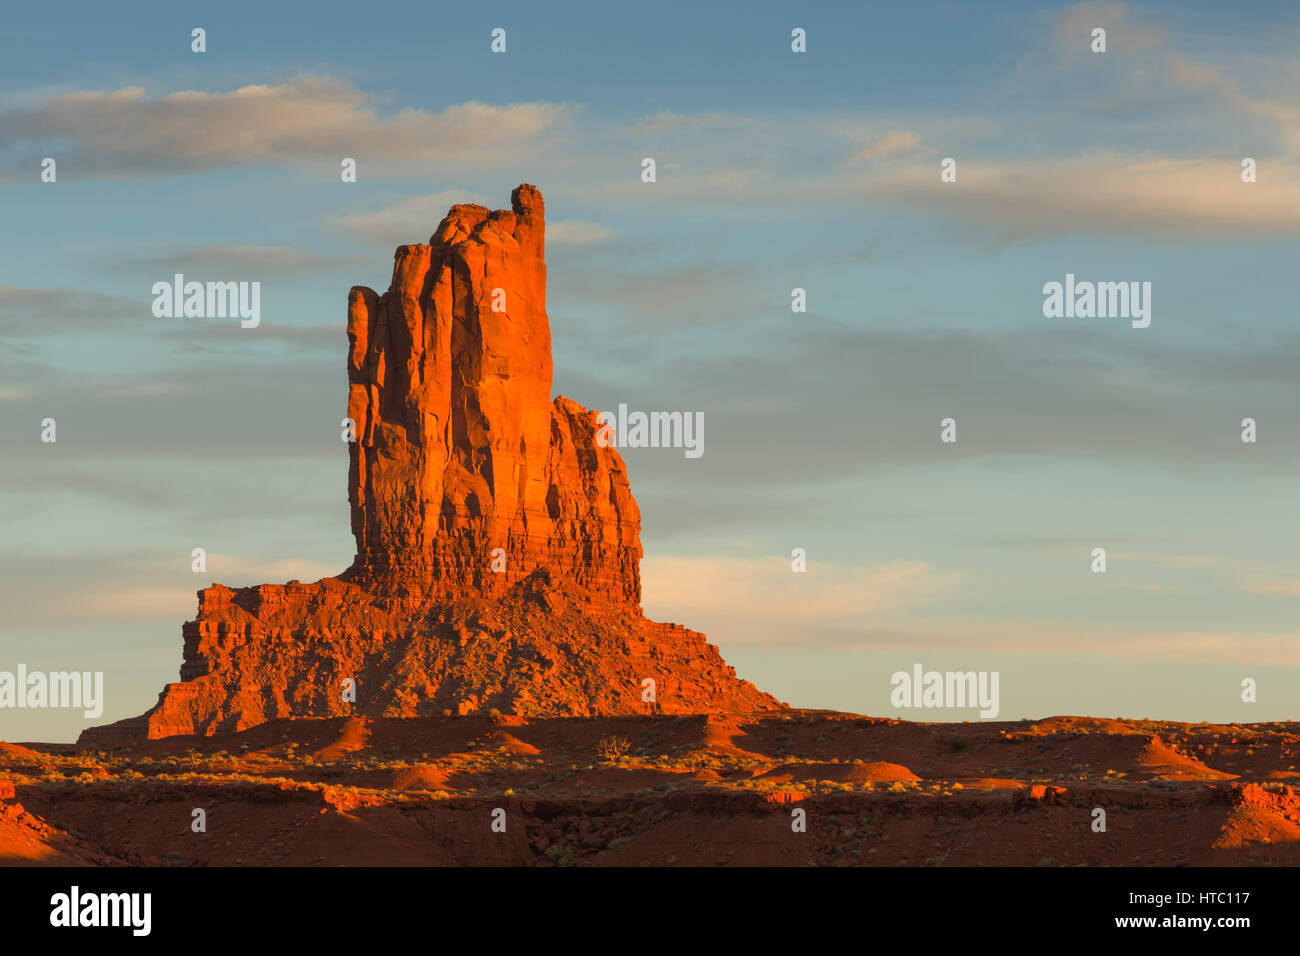 Big Indian rock formation, Monument Valley Navajo Tribal Park, Utah, USA Banque D'Images